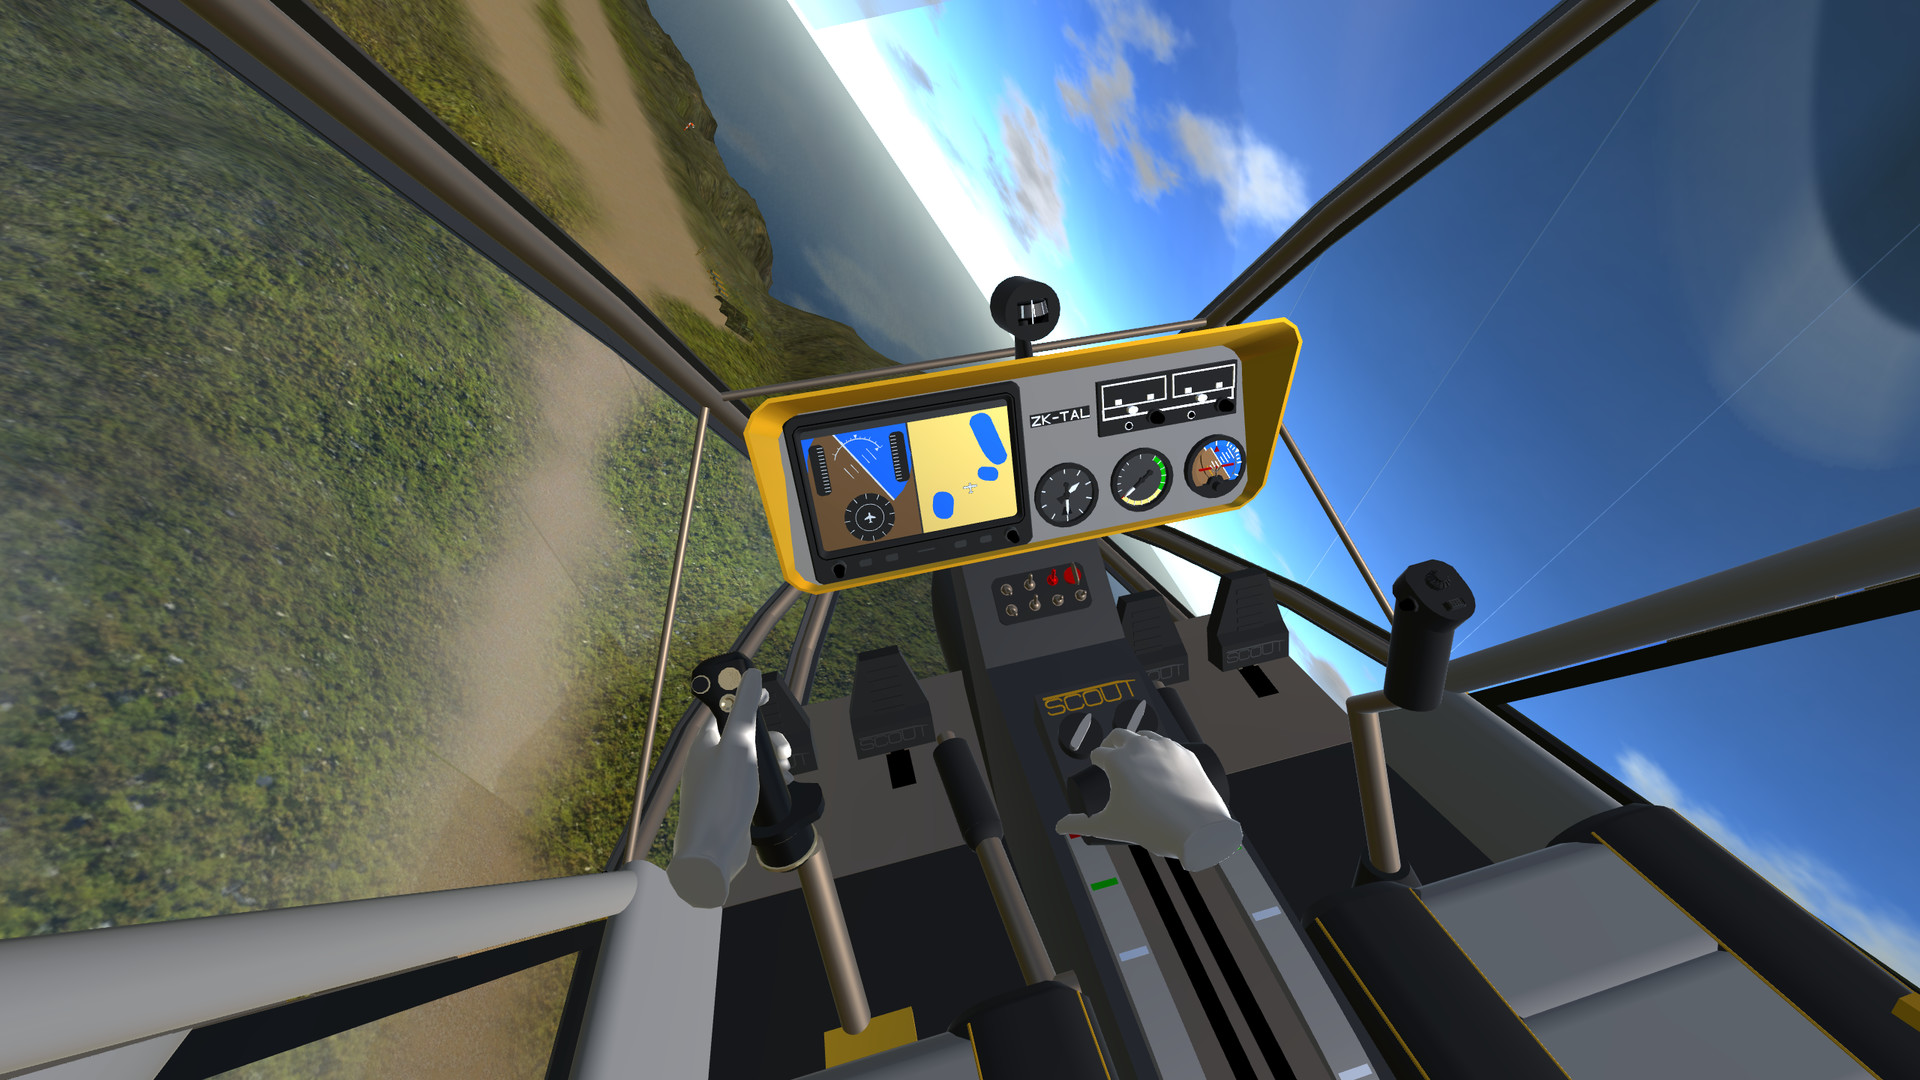 Oculus Quest 游戏《飞行工厂VR》Simple Planes VR